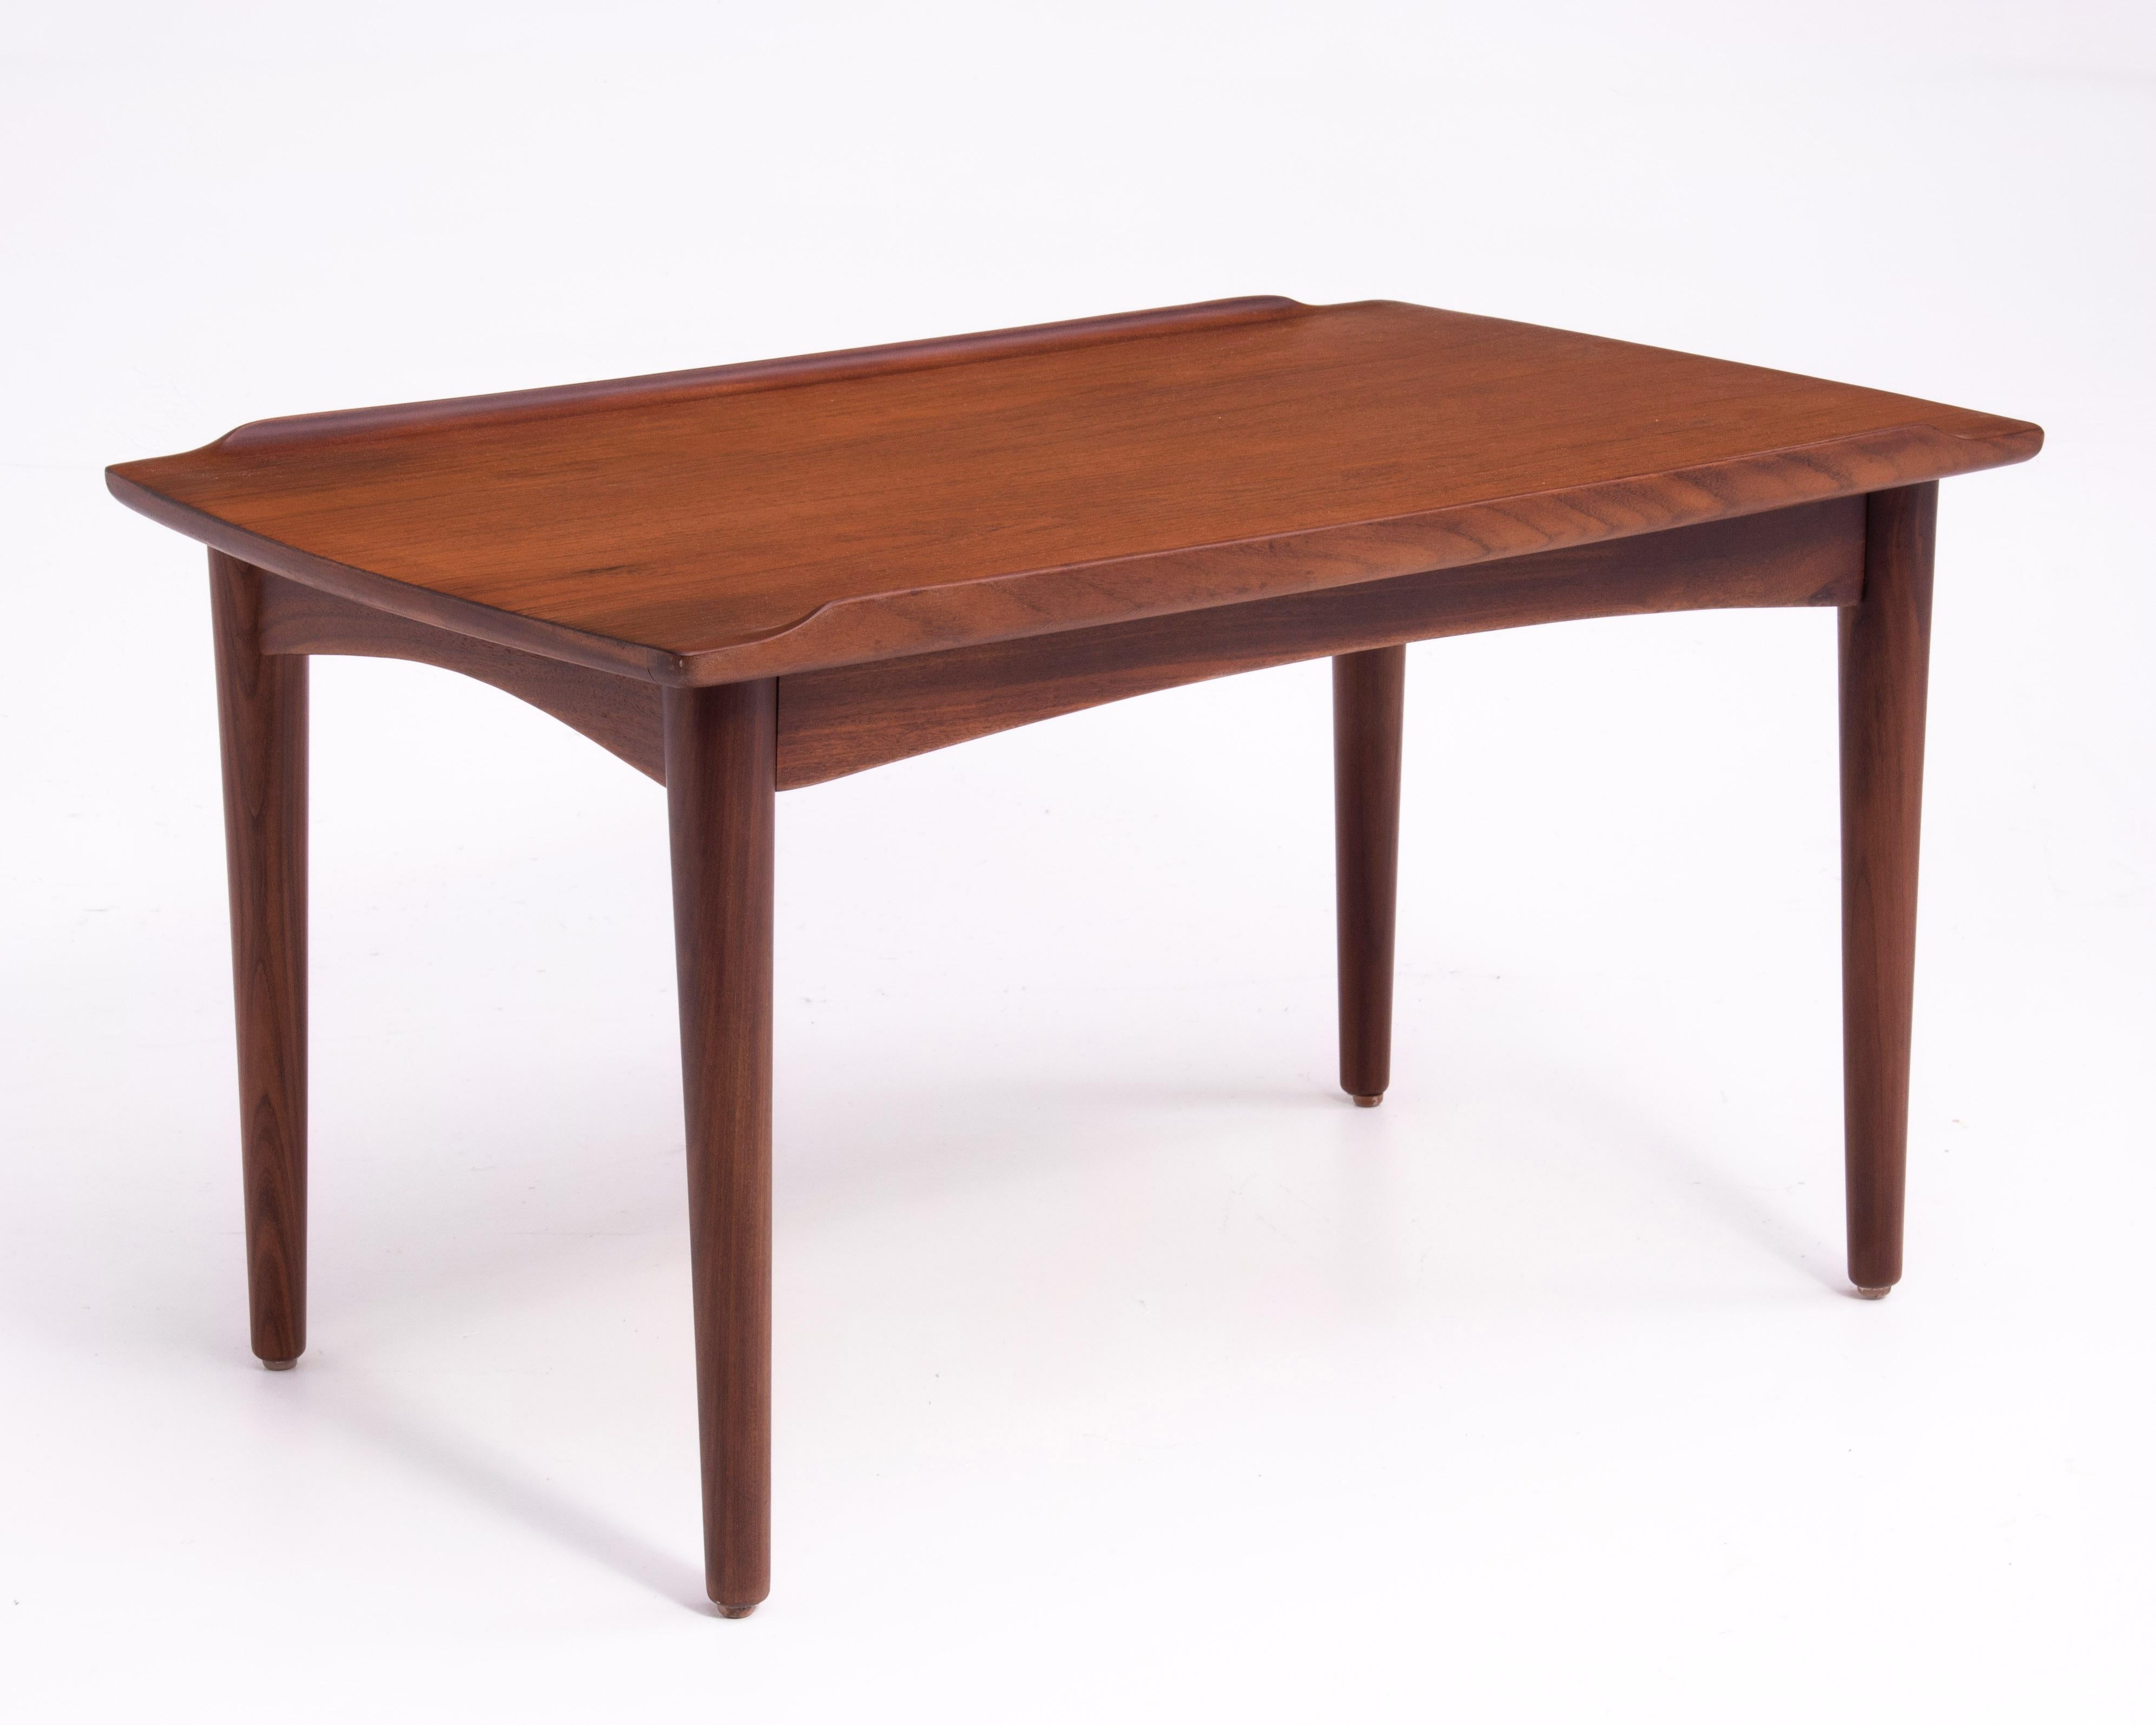 Mid-Century Modern Danish Modern Teak Dowel Leg Side Table After Grete Jalk Marked B. J. 1970s For Sale